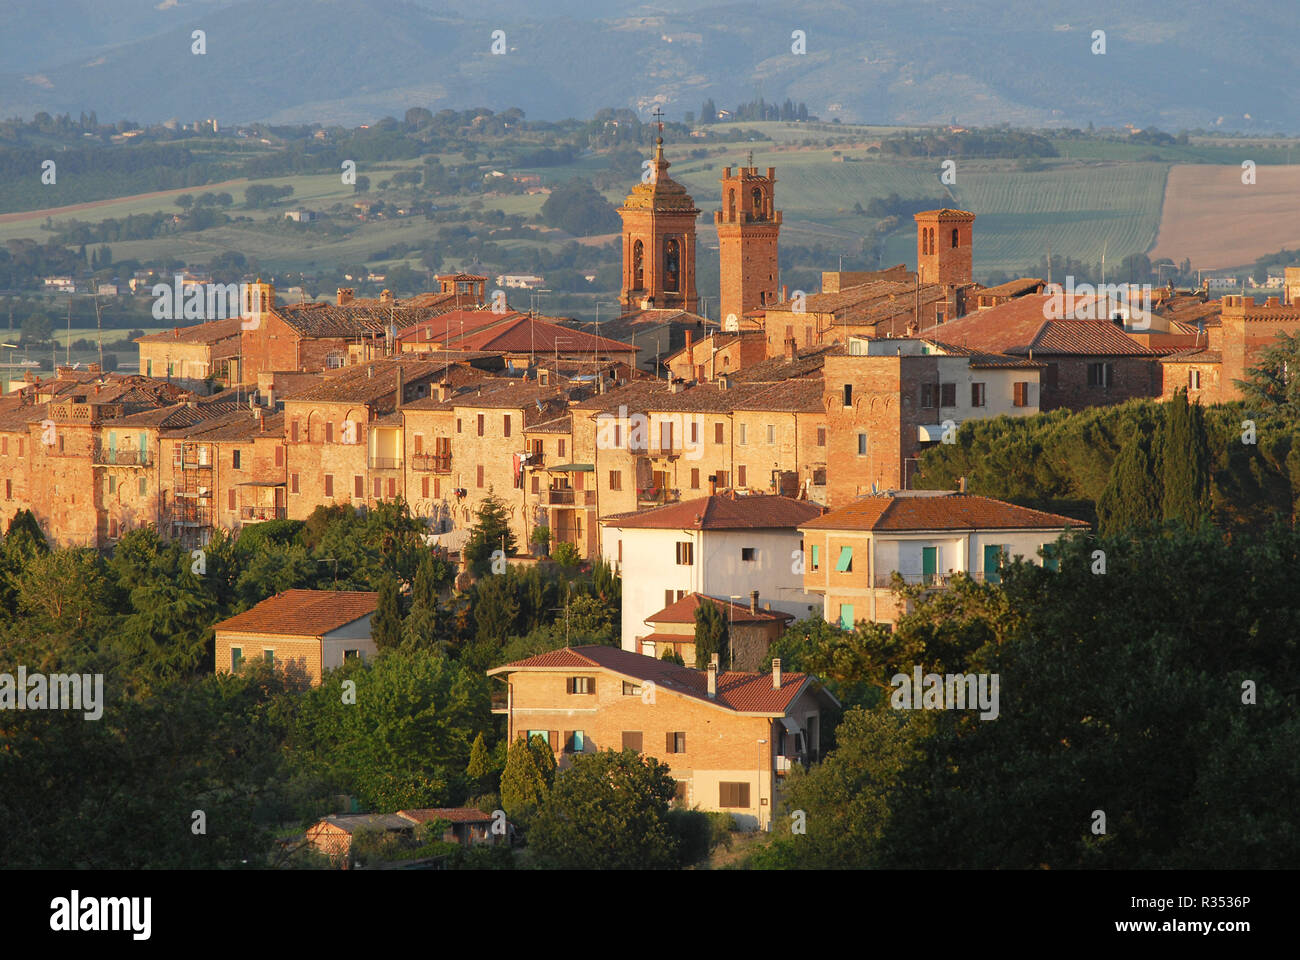 Torrita di Siena, Toscana, Italia Foto © Daiano Cristini/Sintesi/Alamy Stock Photo Foto de stock